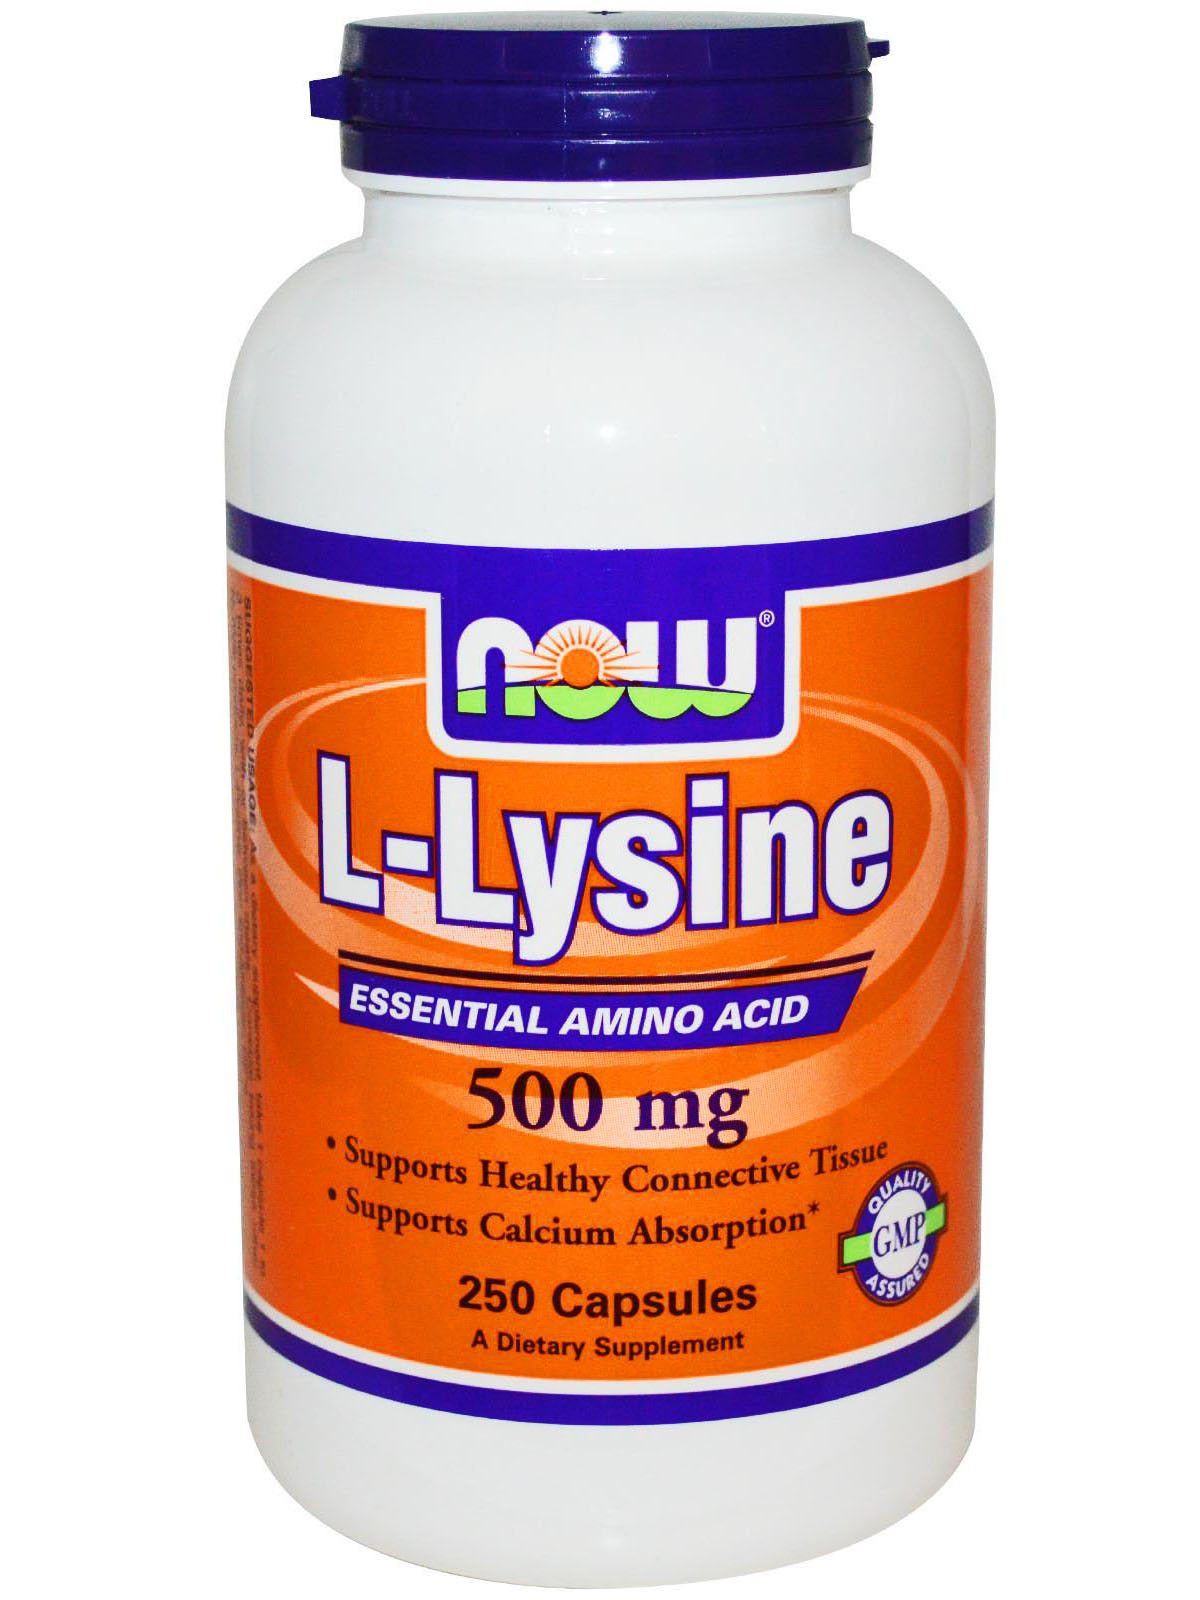 NOW L-Lysine 500mg (100 табл)